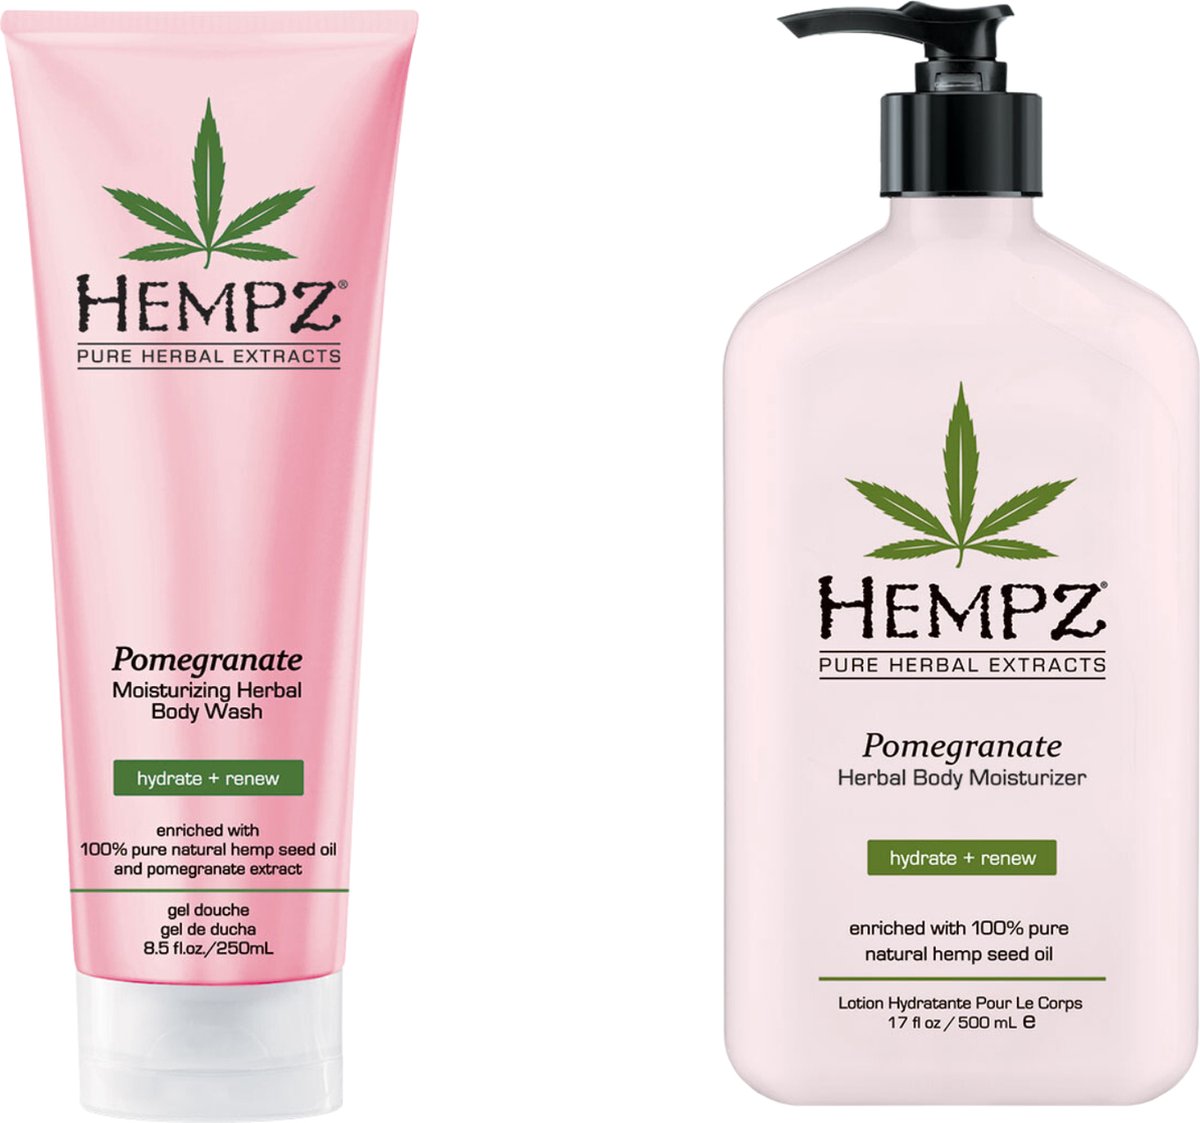 Hempz Pomegranate Herbal Body Moisturizer 500ml + Bodywash 250ml